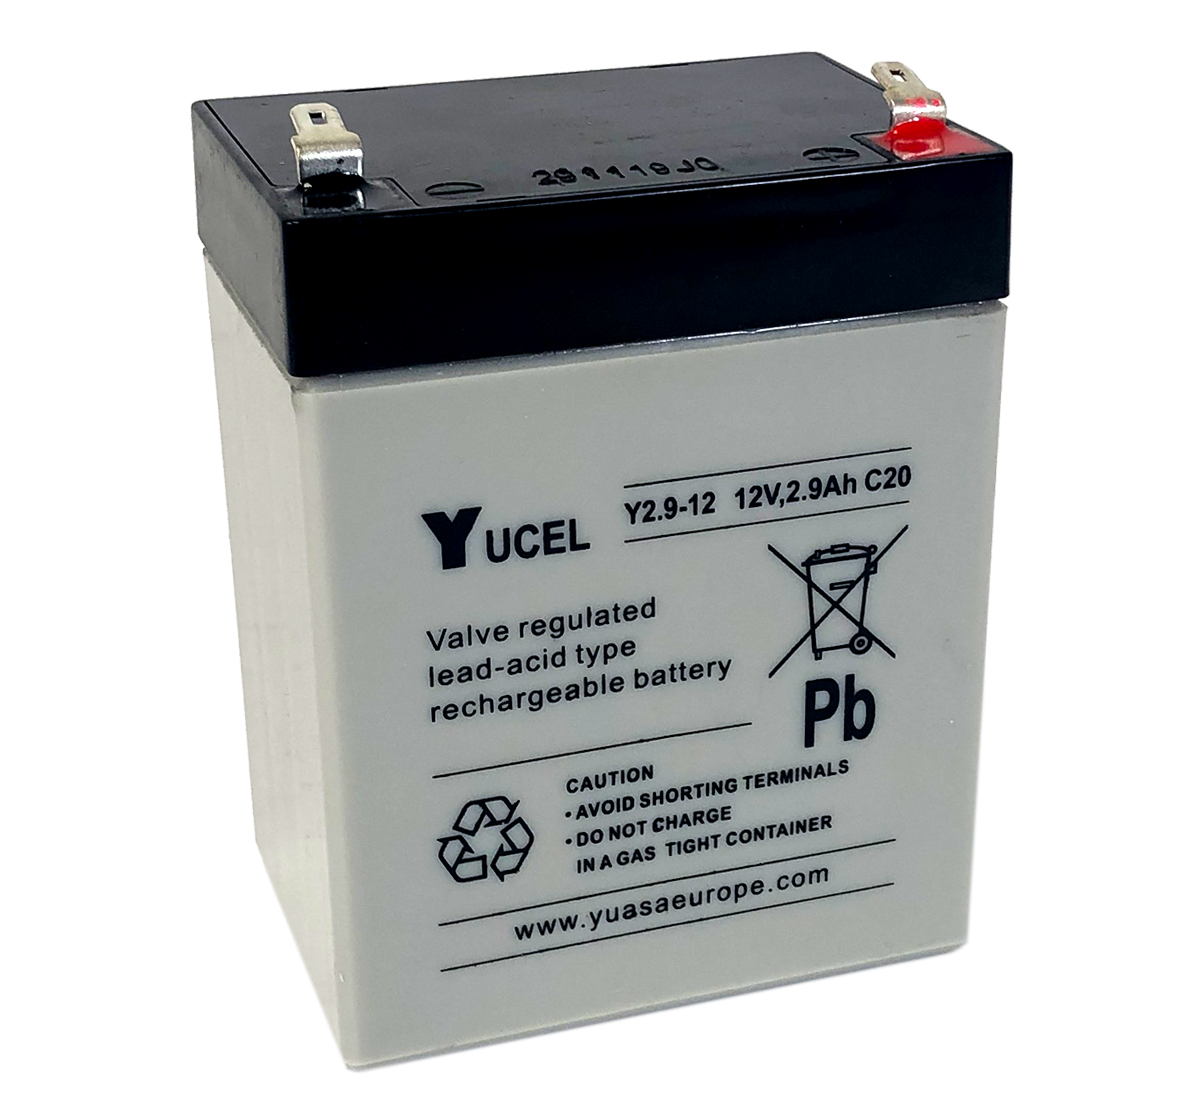 Yucel Y2.9-12 Lead Acid Battery - Replaces Yuasa NP2.9-12